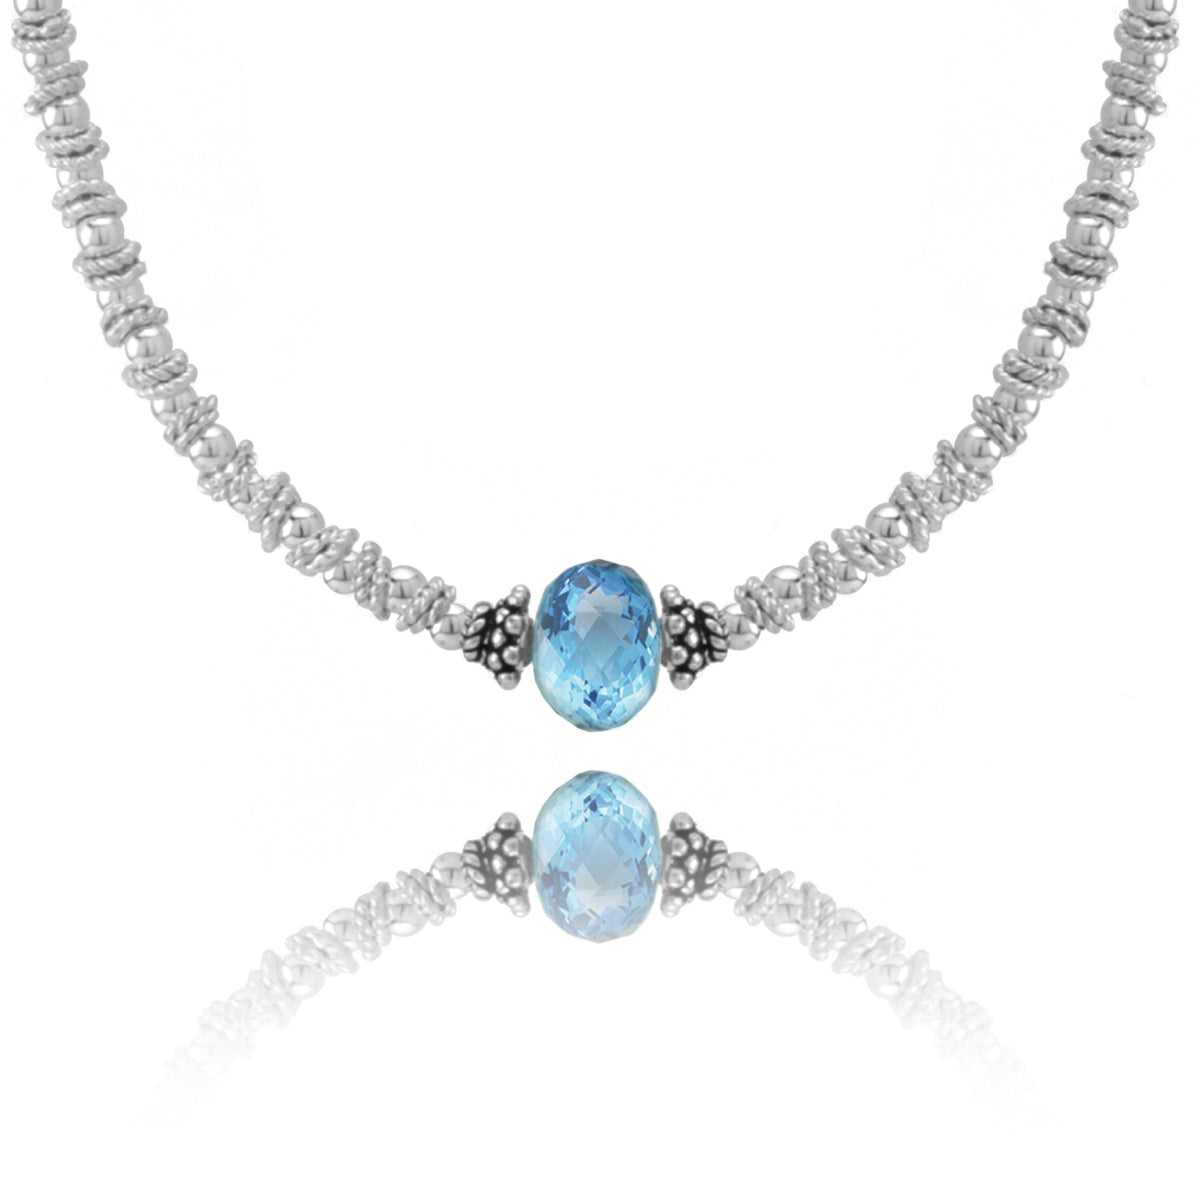 Blue Topaz & Sterling Silver Necklace